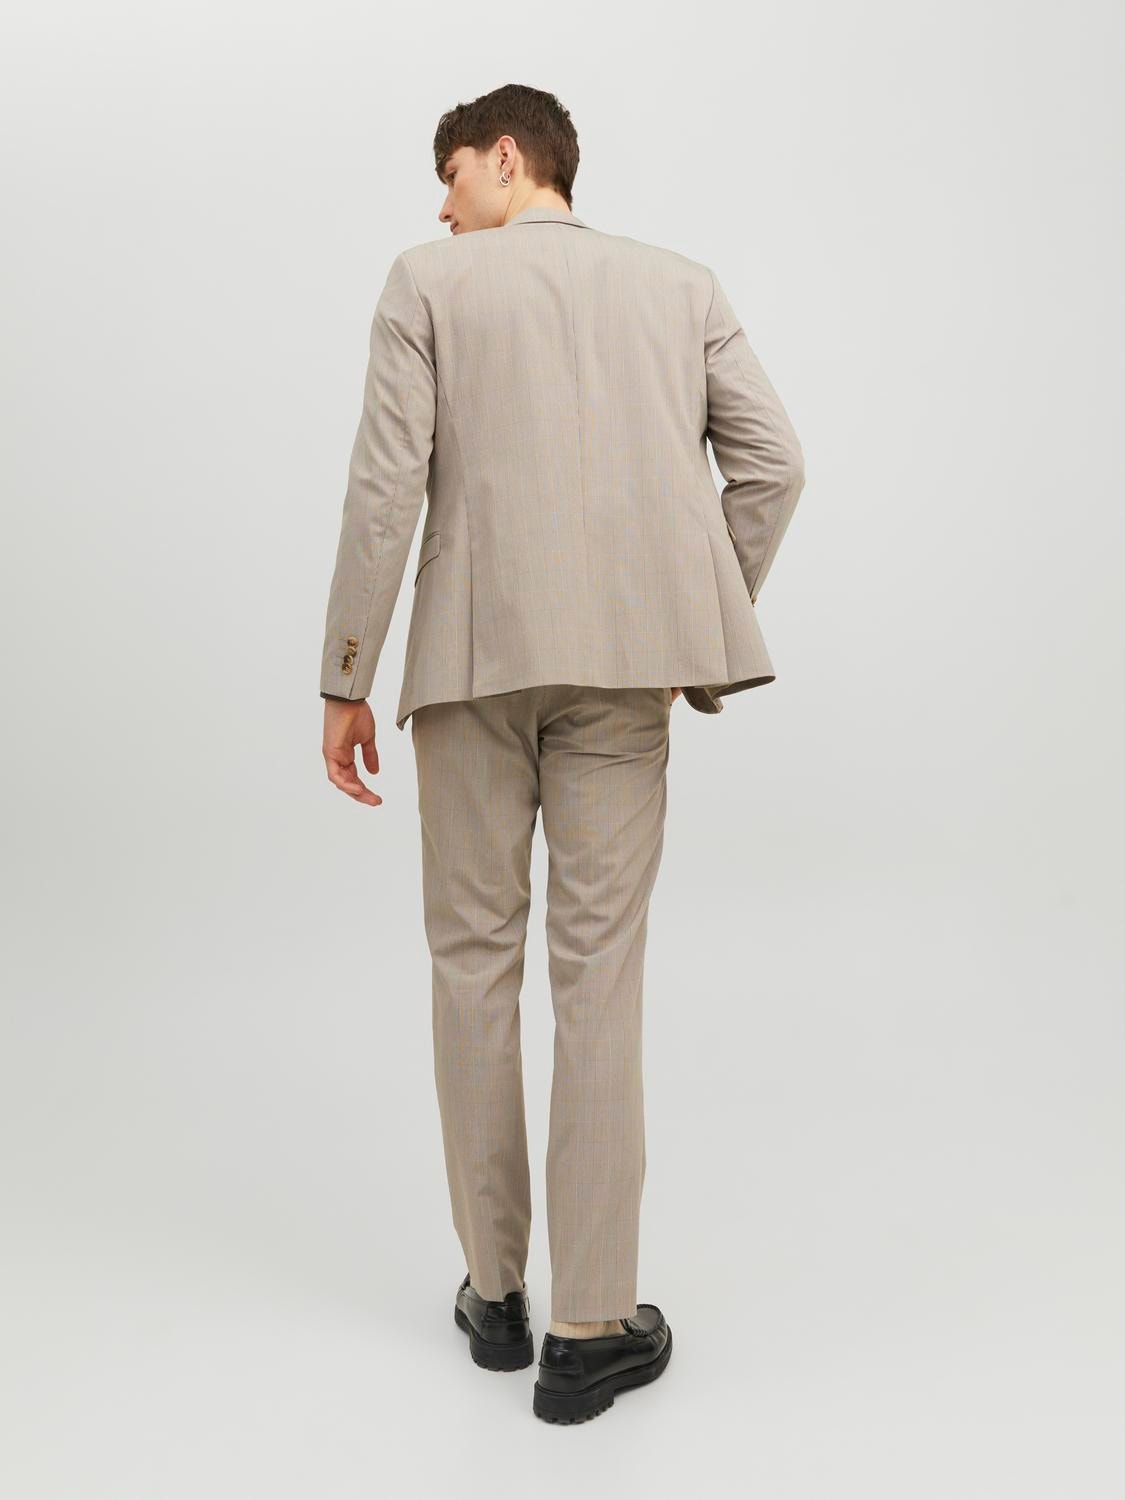 JPRSOLARIS Super Slim Fit Blazer with 20% discount! | Jack & Jones®